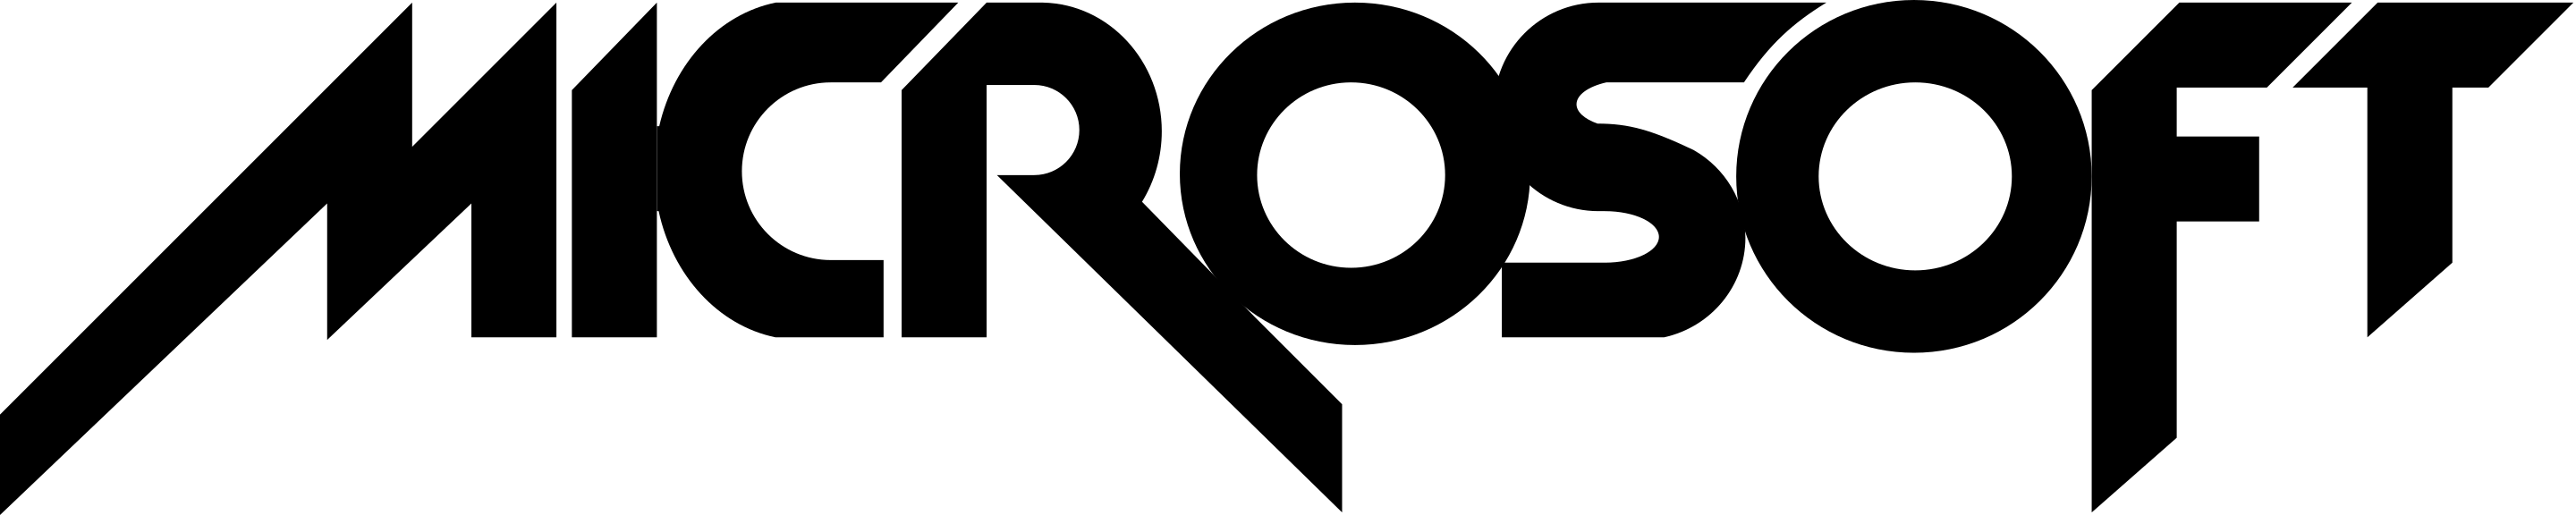 Second Microsoft logo, in 1980